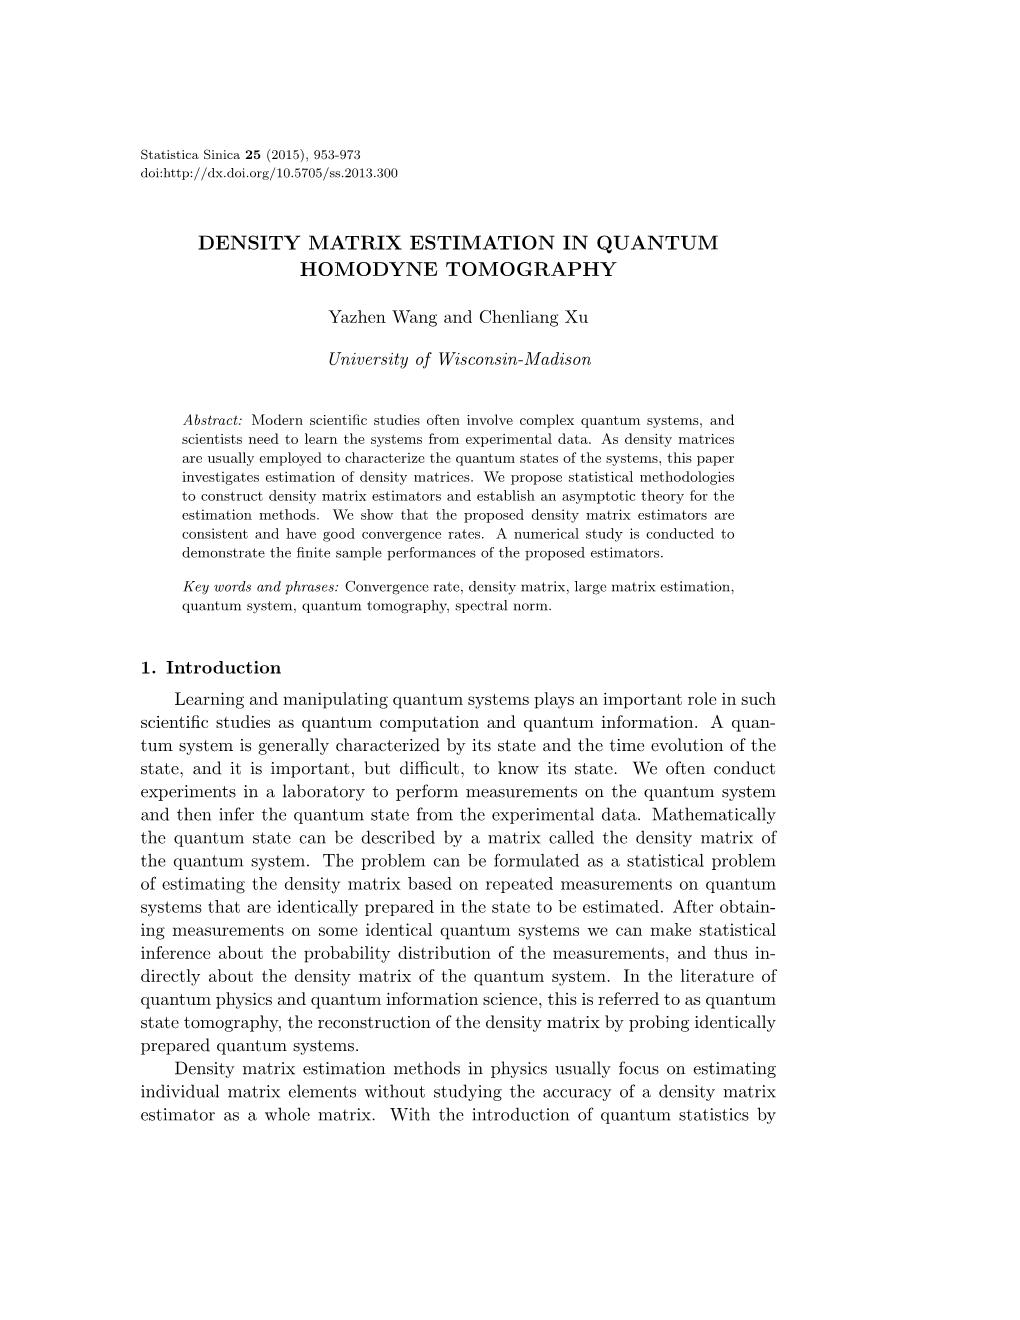 Density Matrix Estimation in Quantum Homodyne Tomography